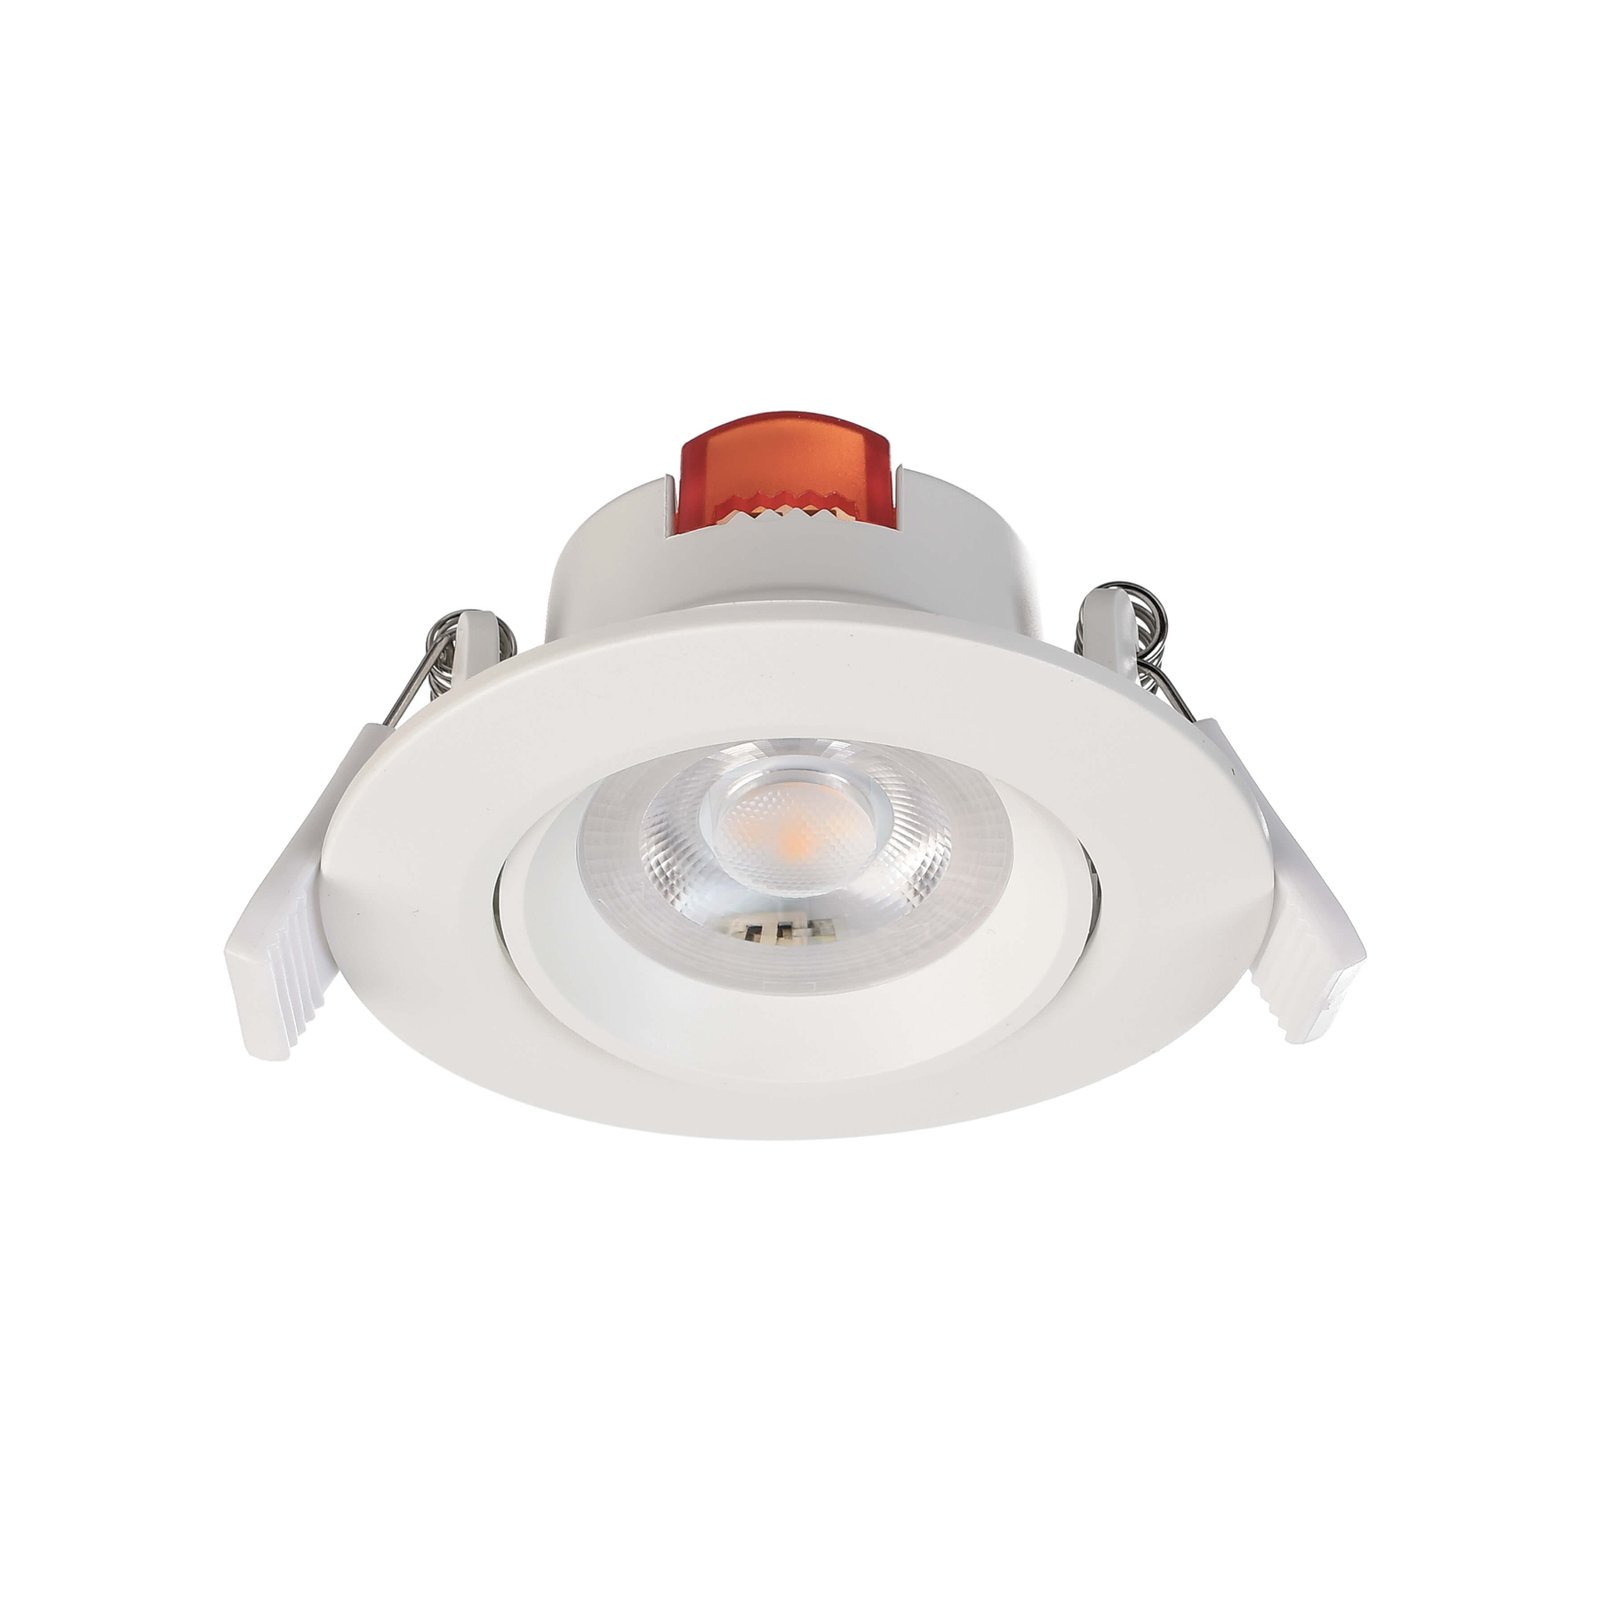 LED-takinbyggnadslampa SMD 68, 230 V, vit, 3 000 K